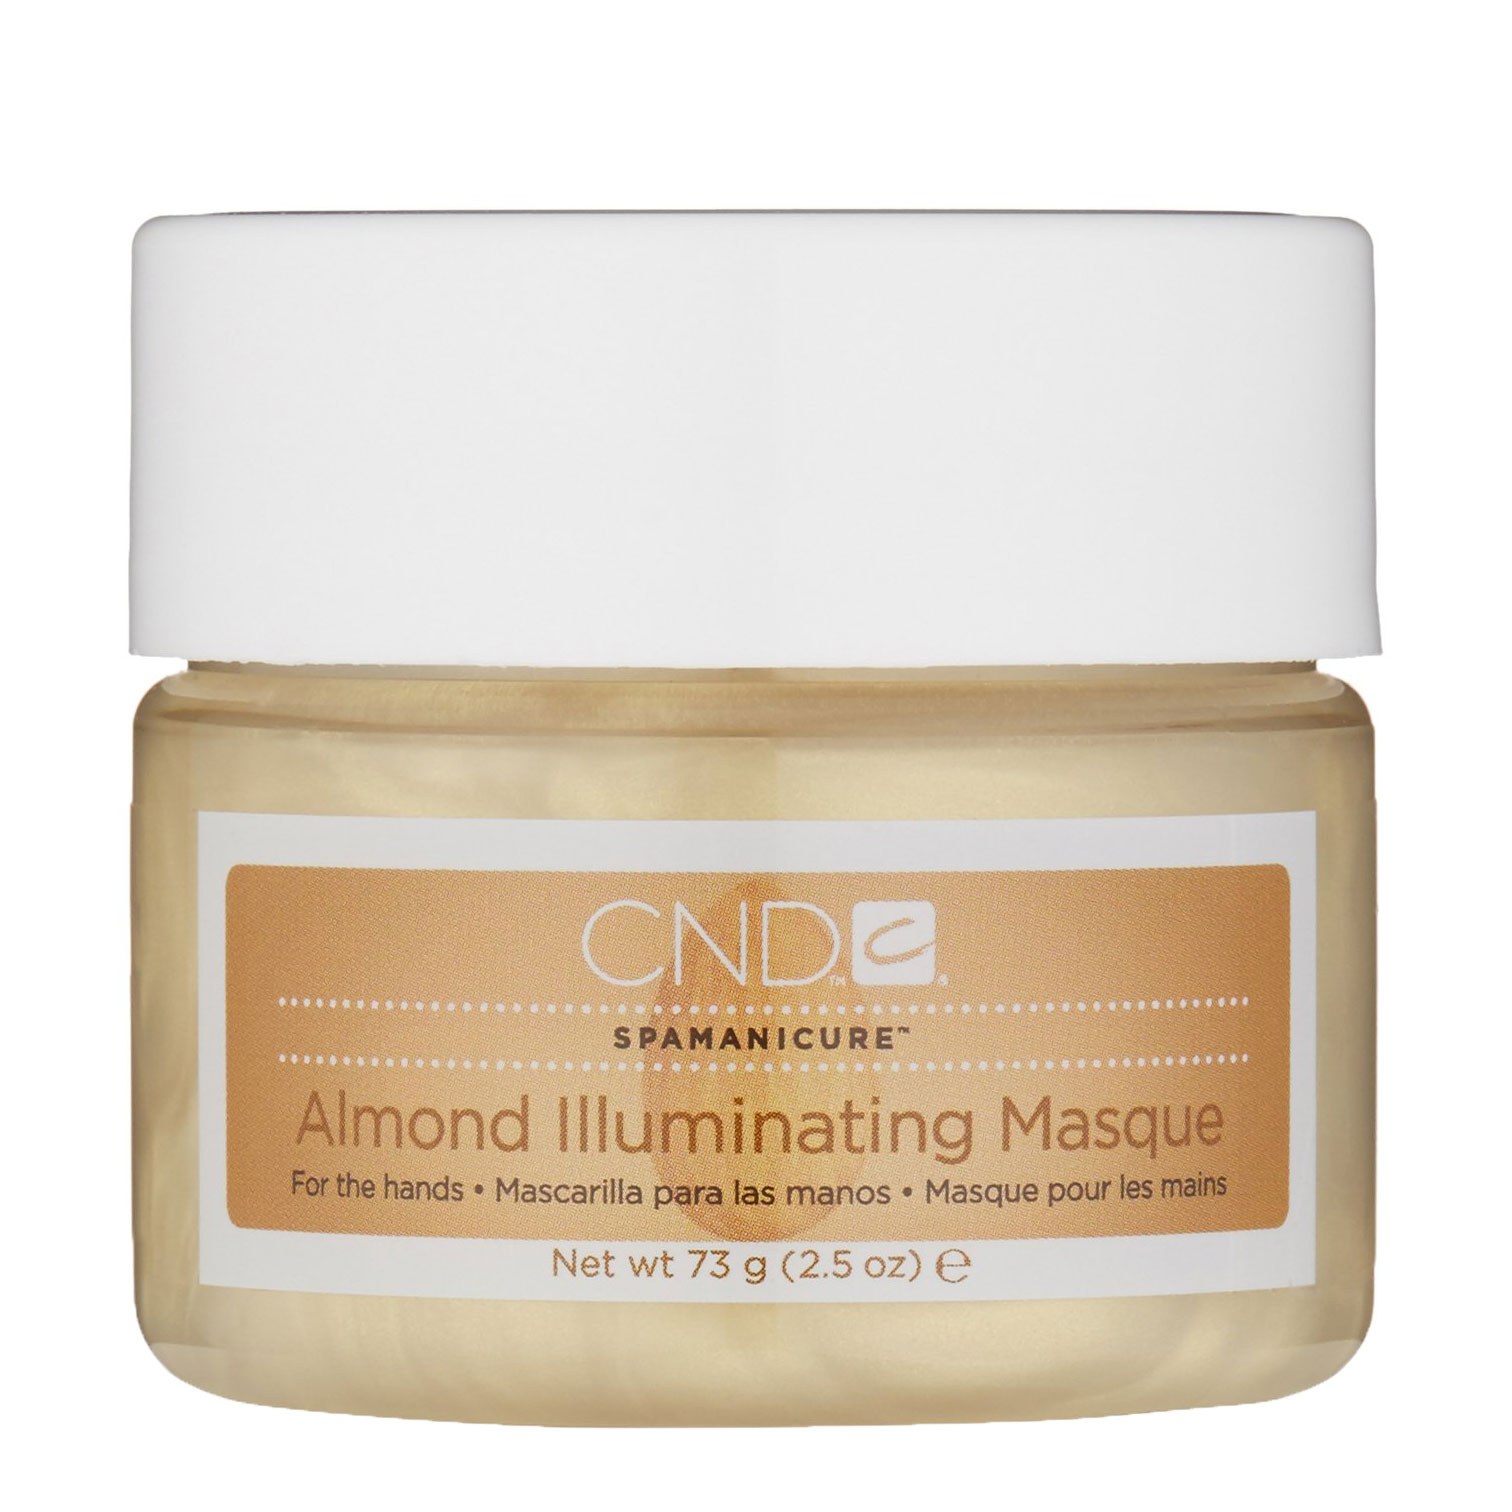 CND Almond Illuminating Masque 2.5oz